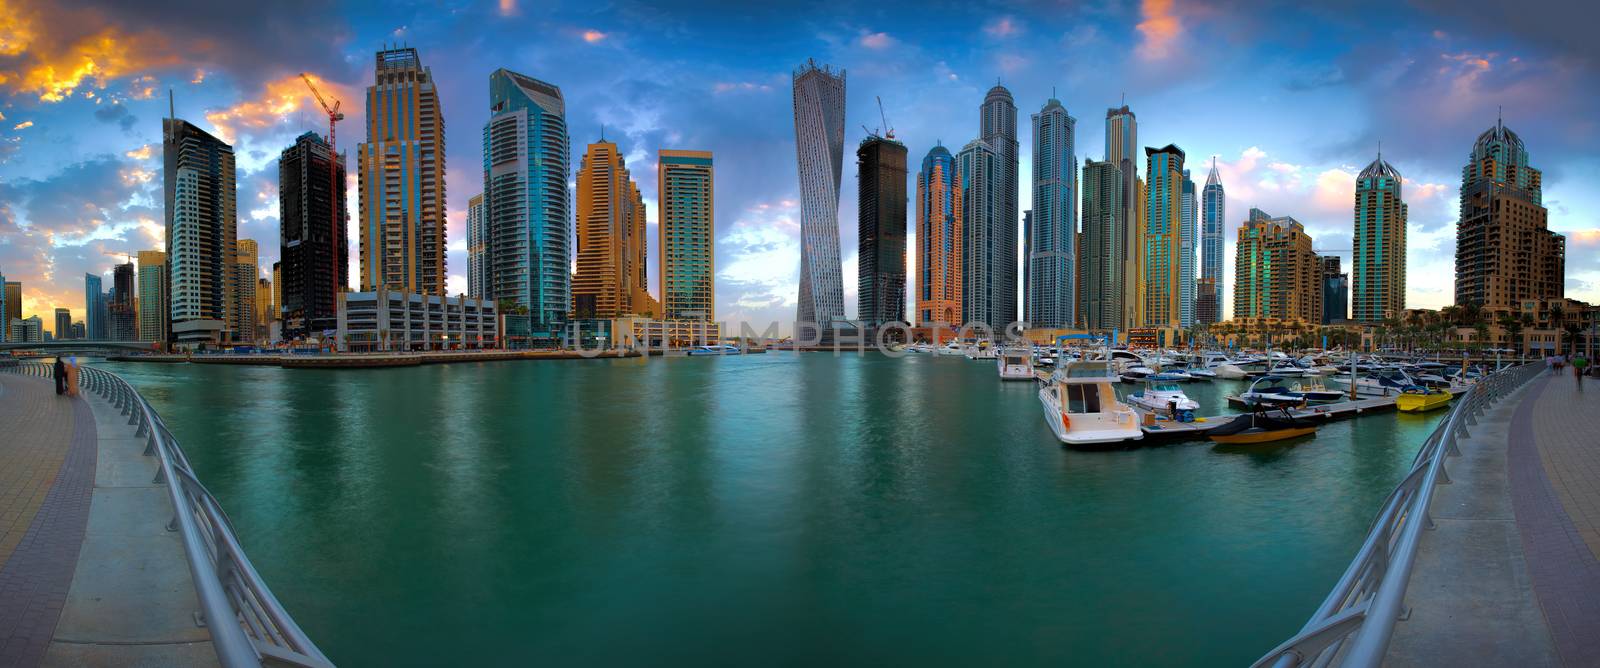 Dubai Marina Panorama by kjorgen